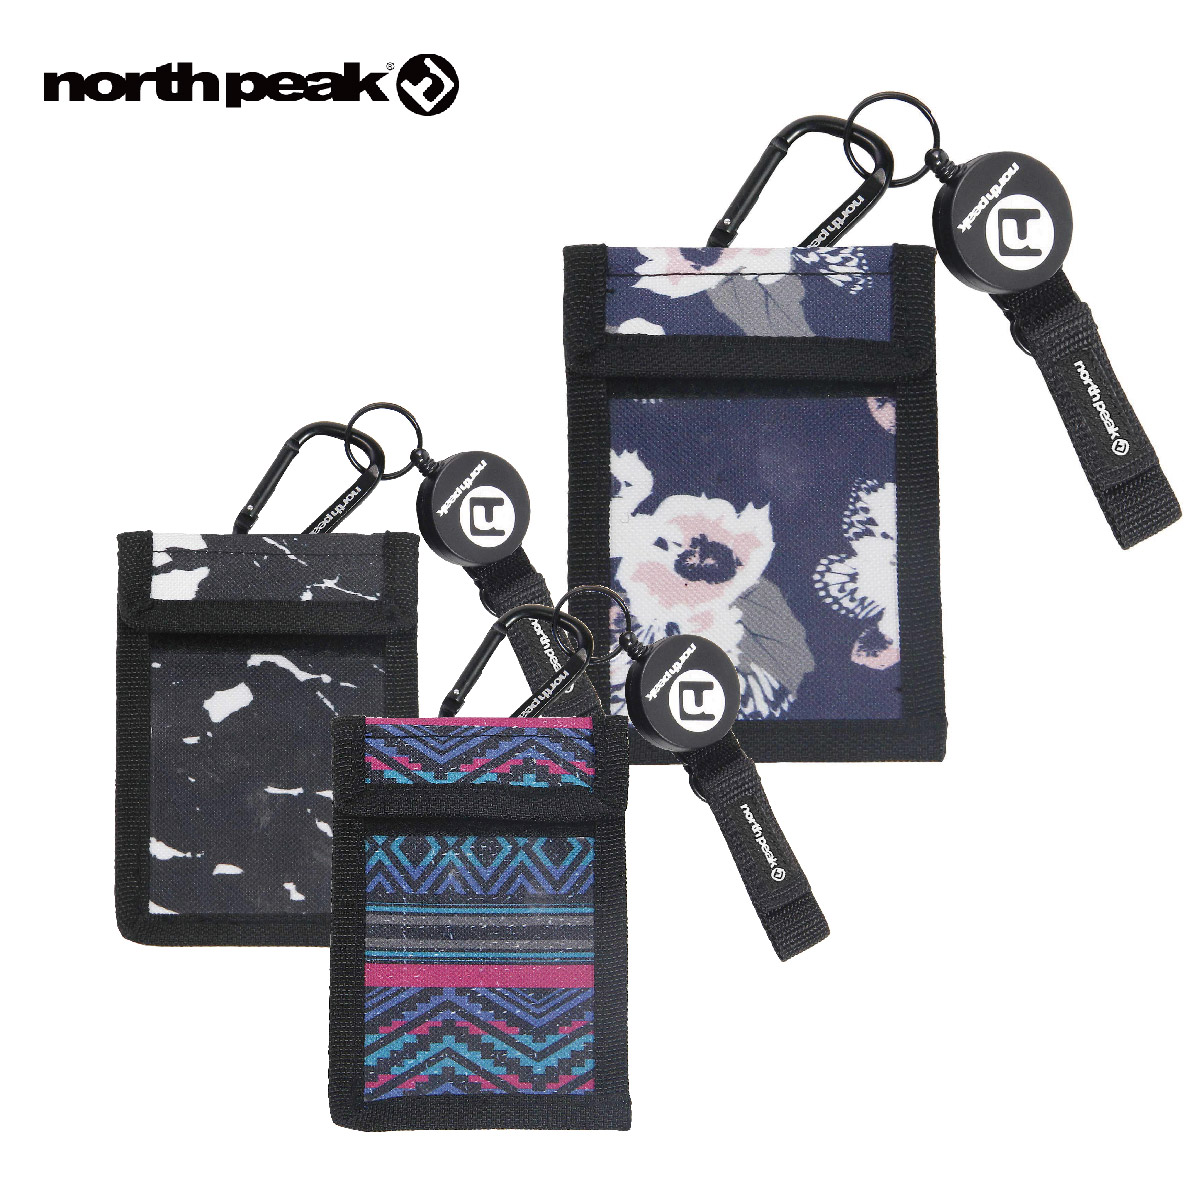 north peak North pi-k pass case <2019>NP-5375 / PASS CASE